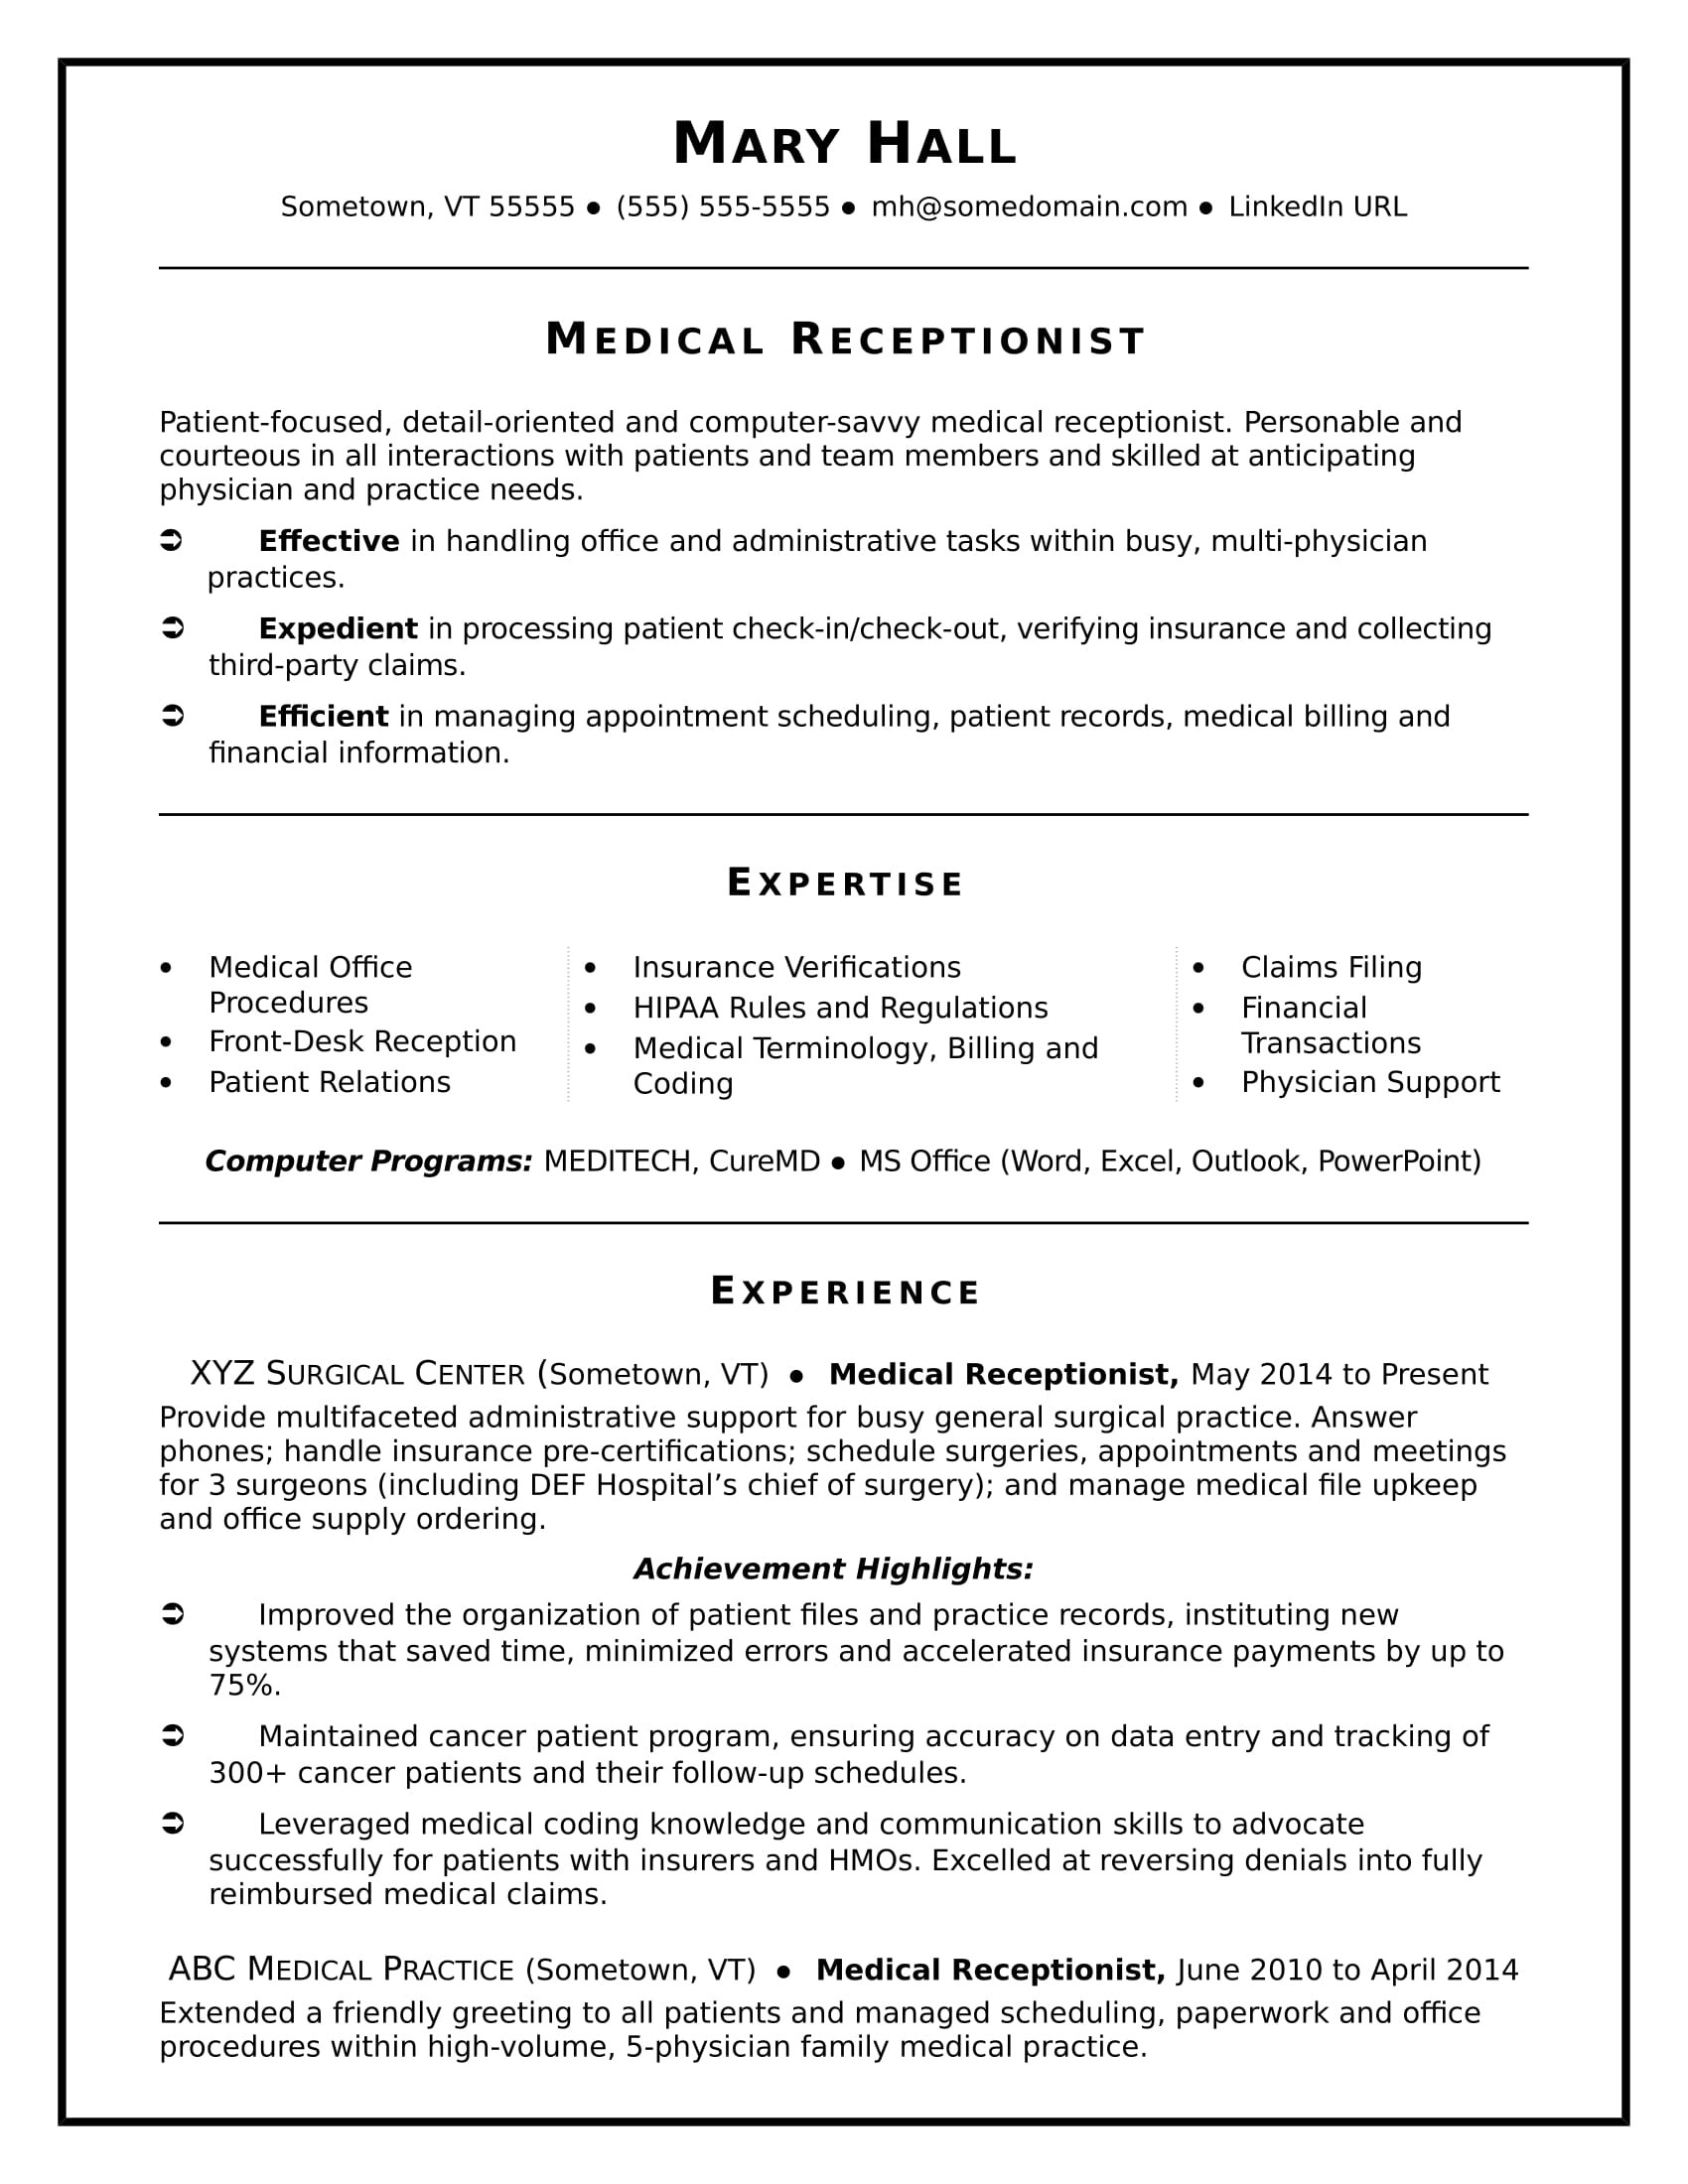 Sample Resume for Entry Level Medical Receptionist Medical Receptionist Resume Sample Monster.com